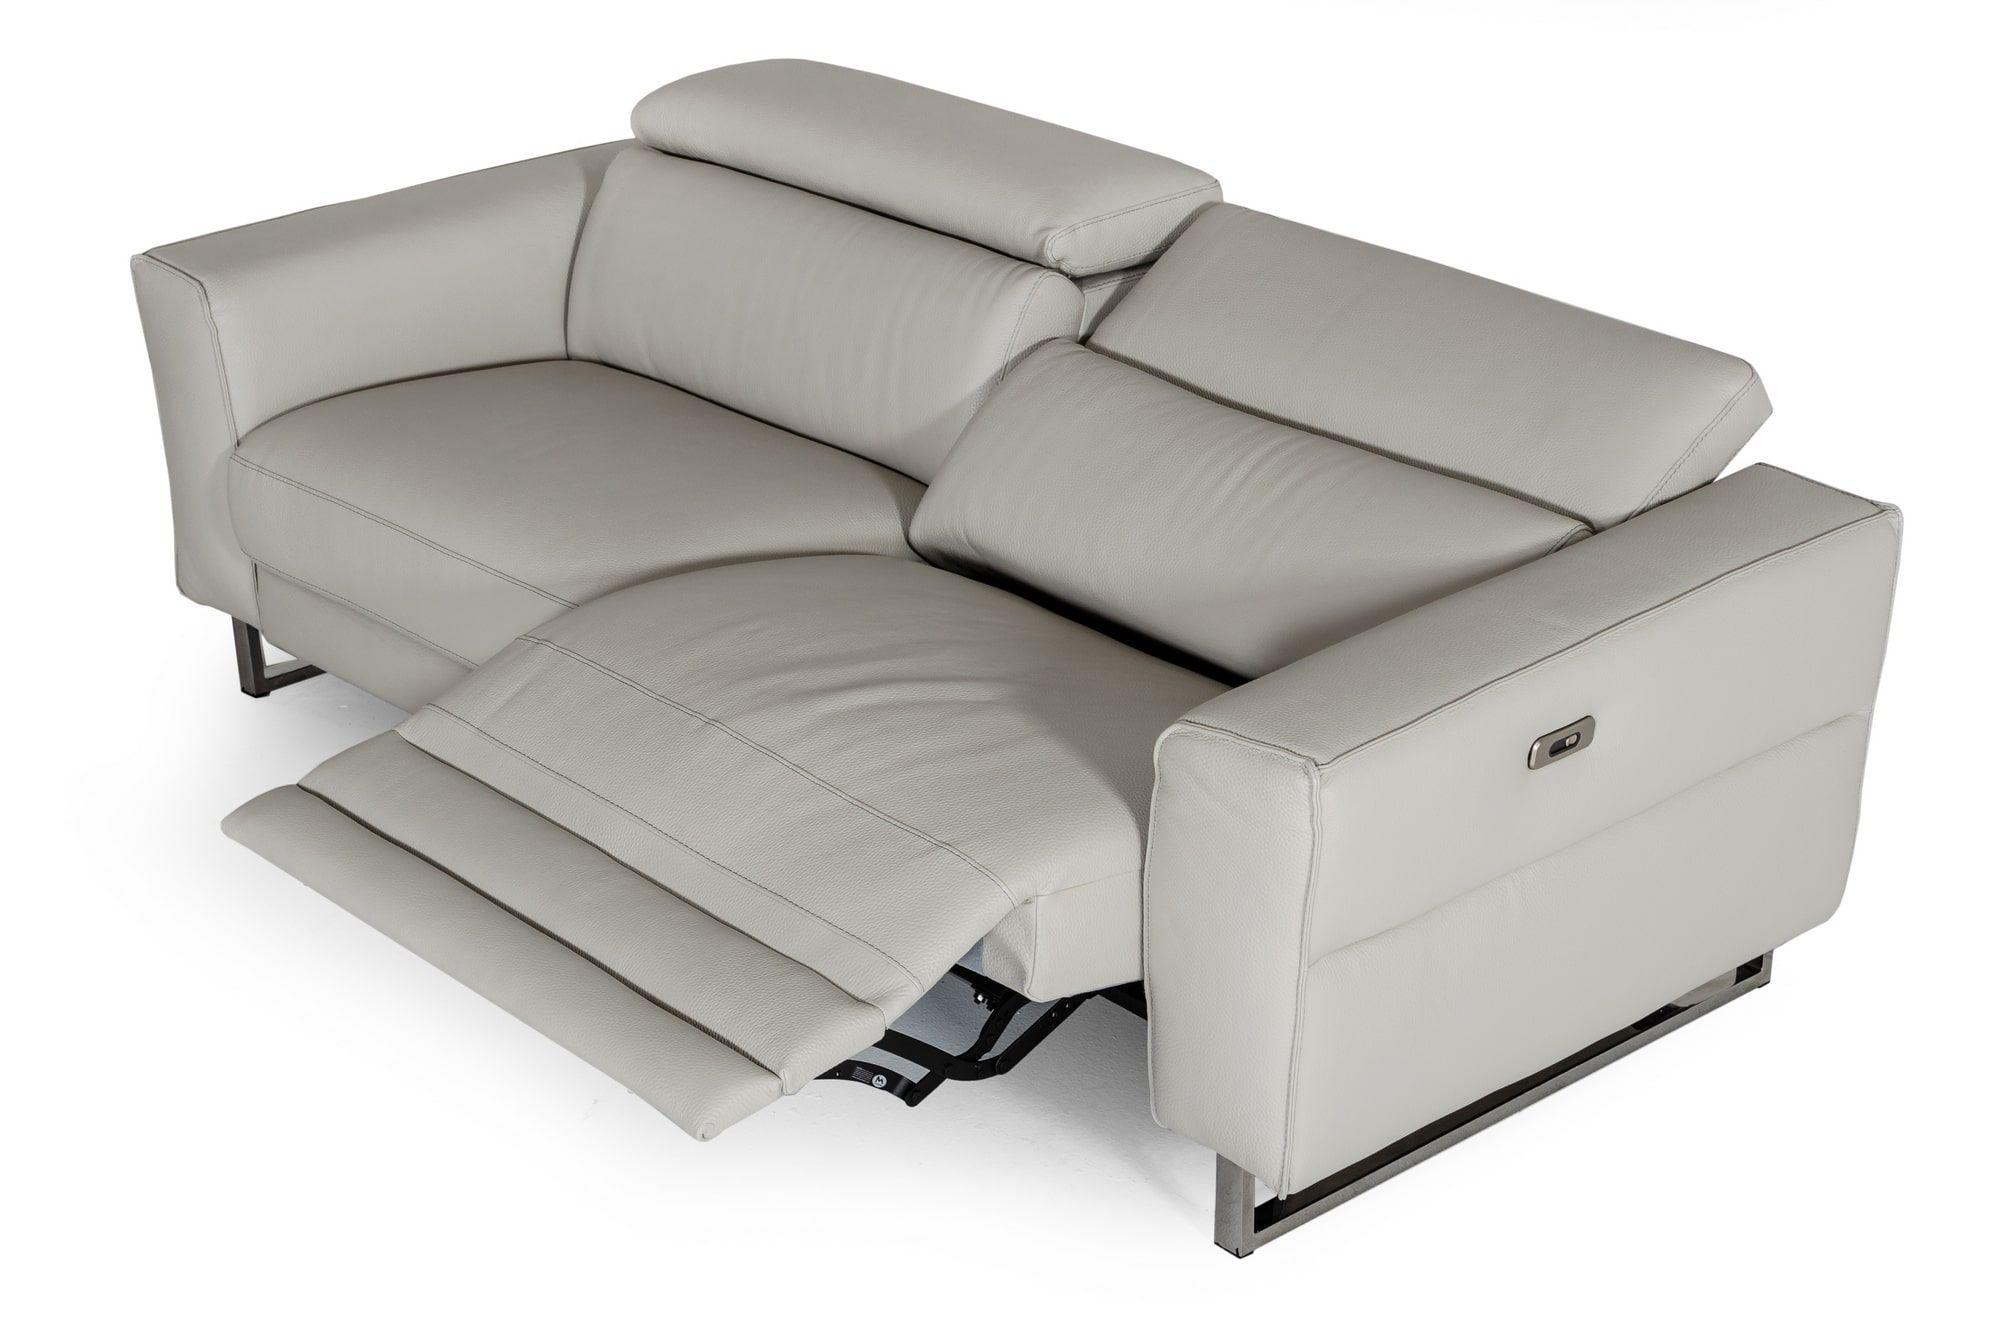 

    
VIG Furniture VGDDLUCCA-GREY-S Recliner Sofa Gray VGDDLUCCA-GREY-S
